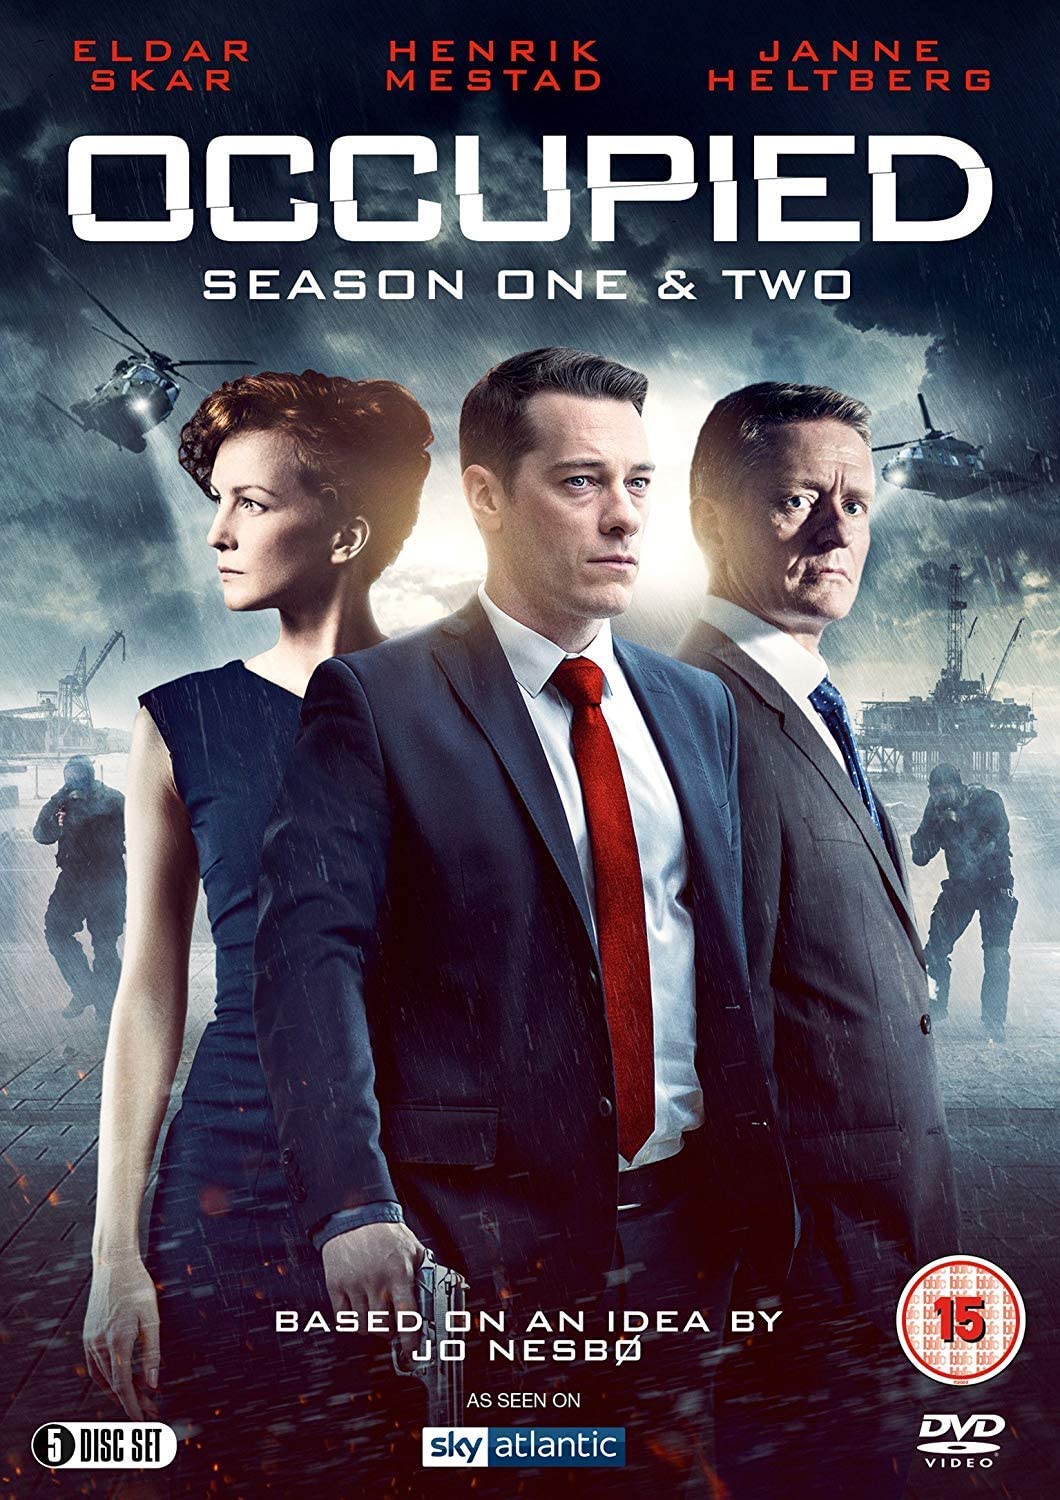 Occupied: Season One & Two [Sky Atlantic] [DVD]